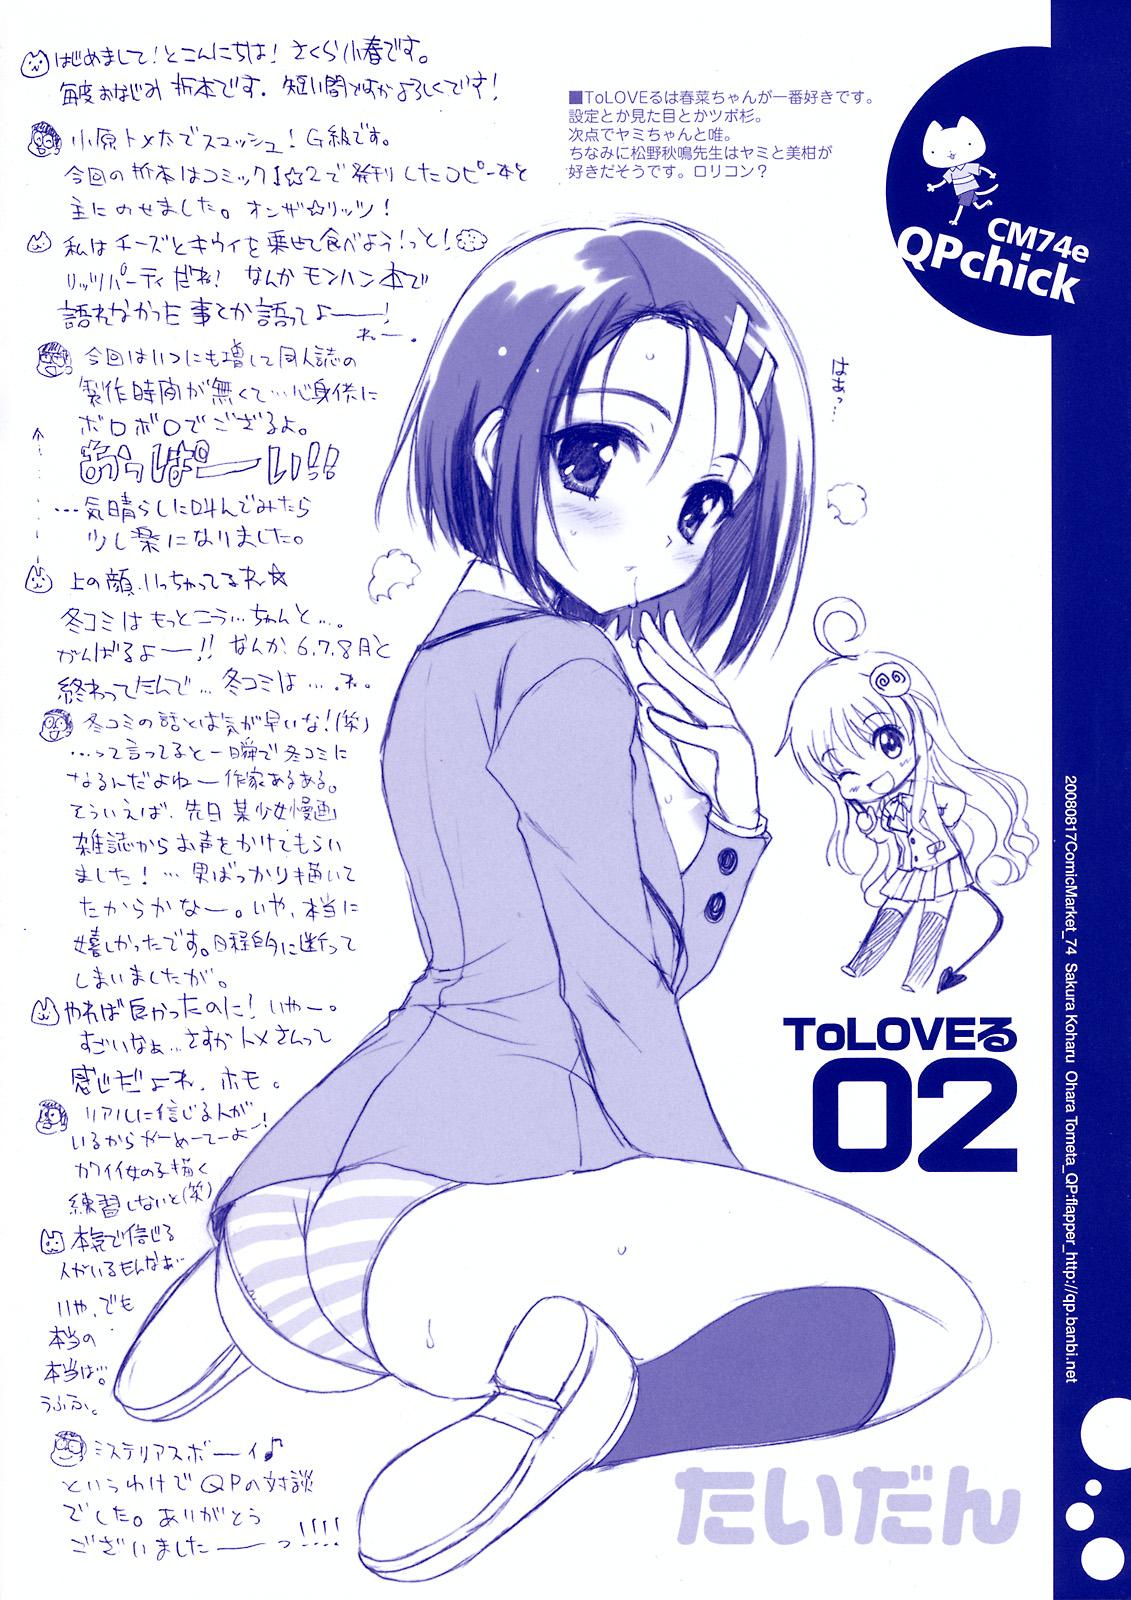 Anime QPchickCM74e - Zero no tsukaima Assfuck - Page 2